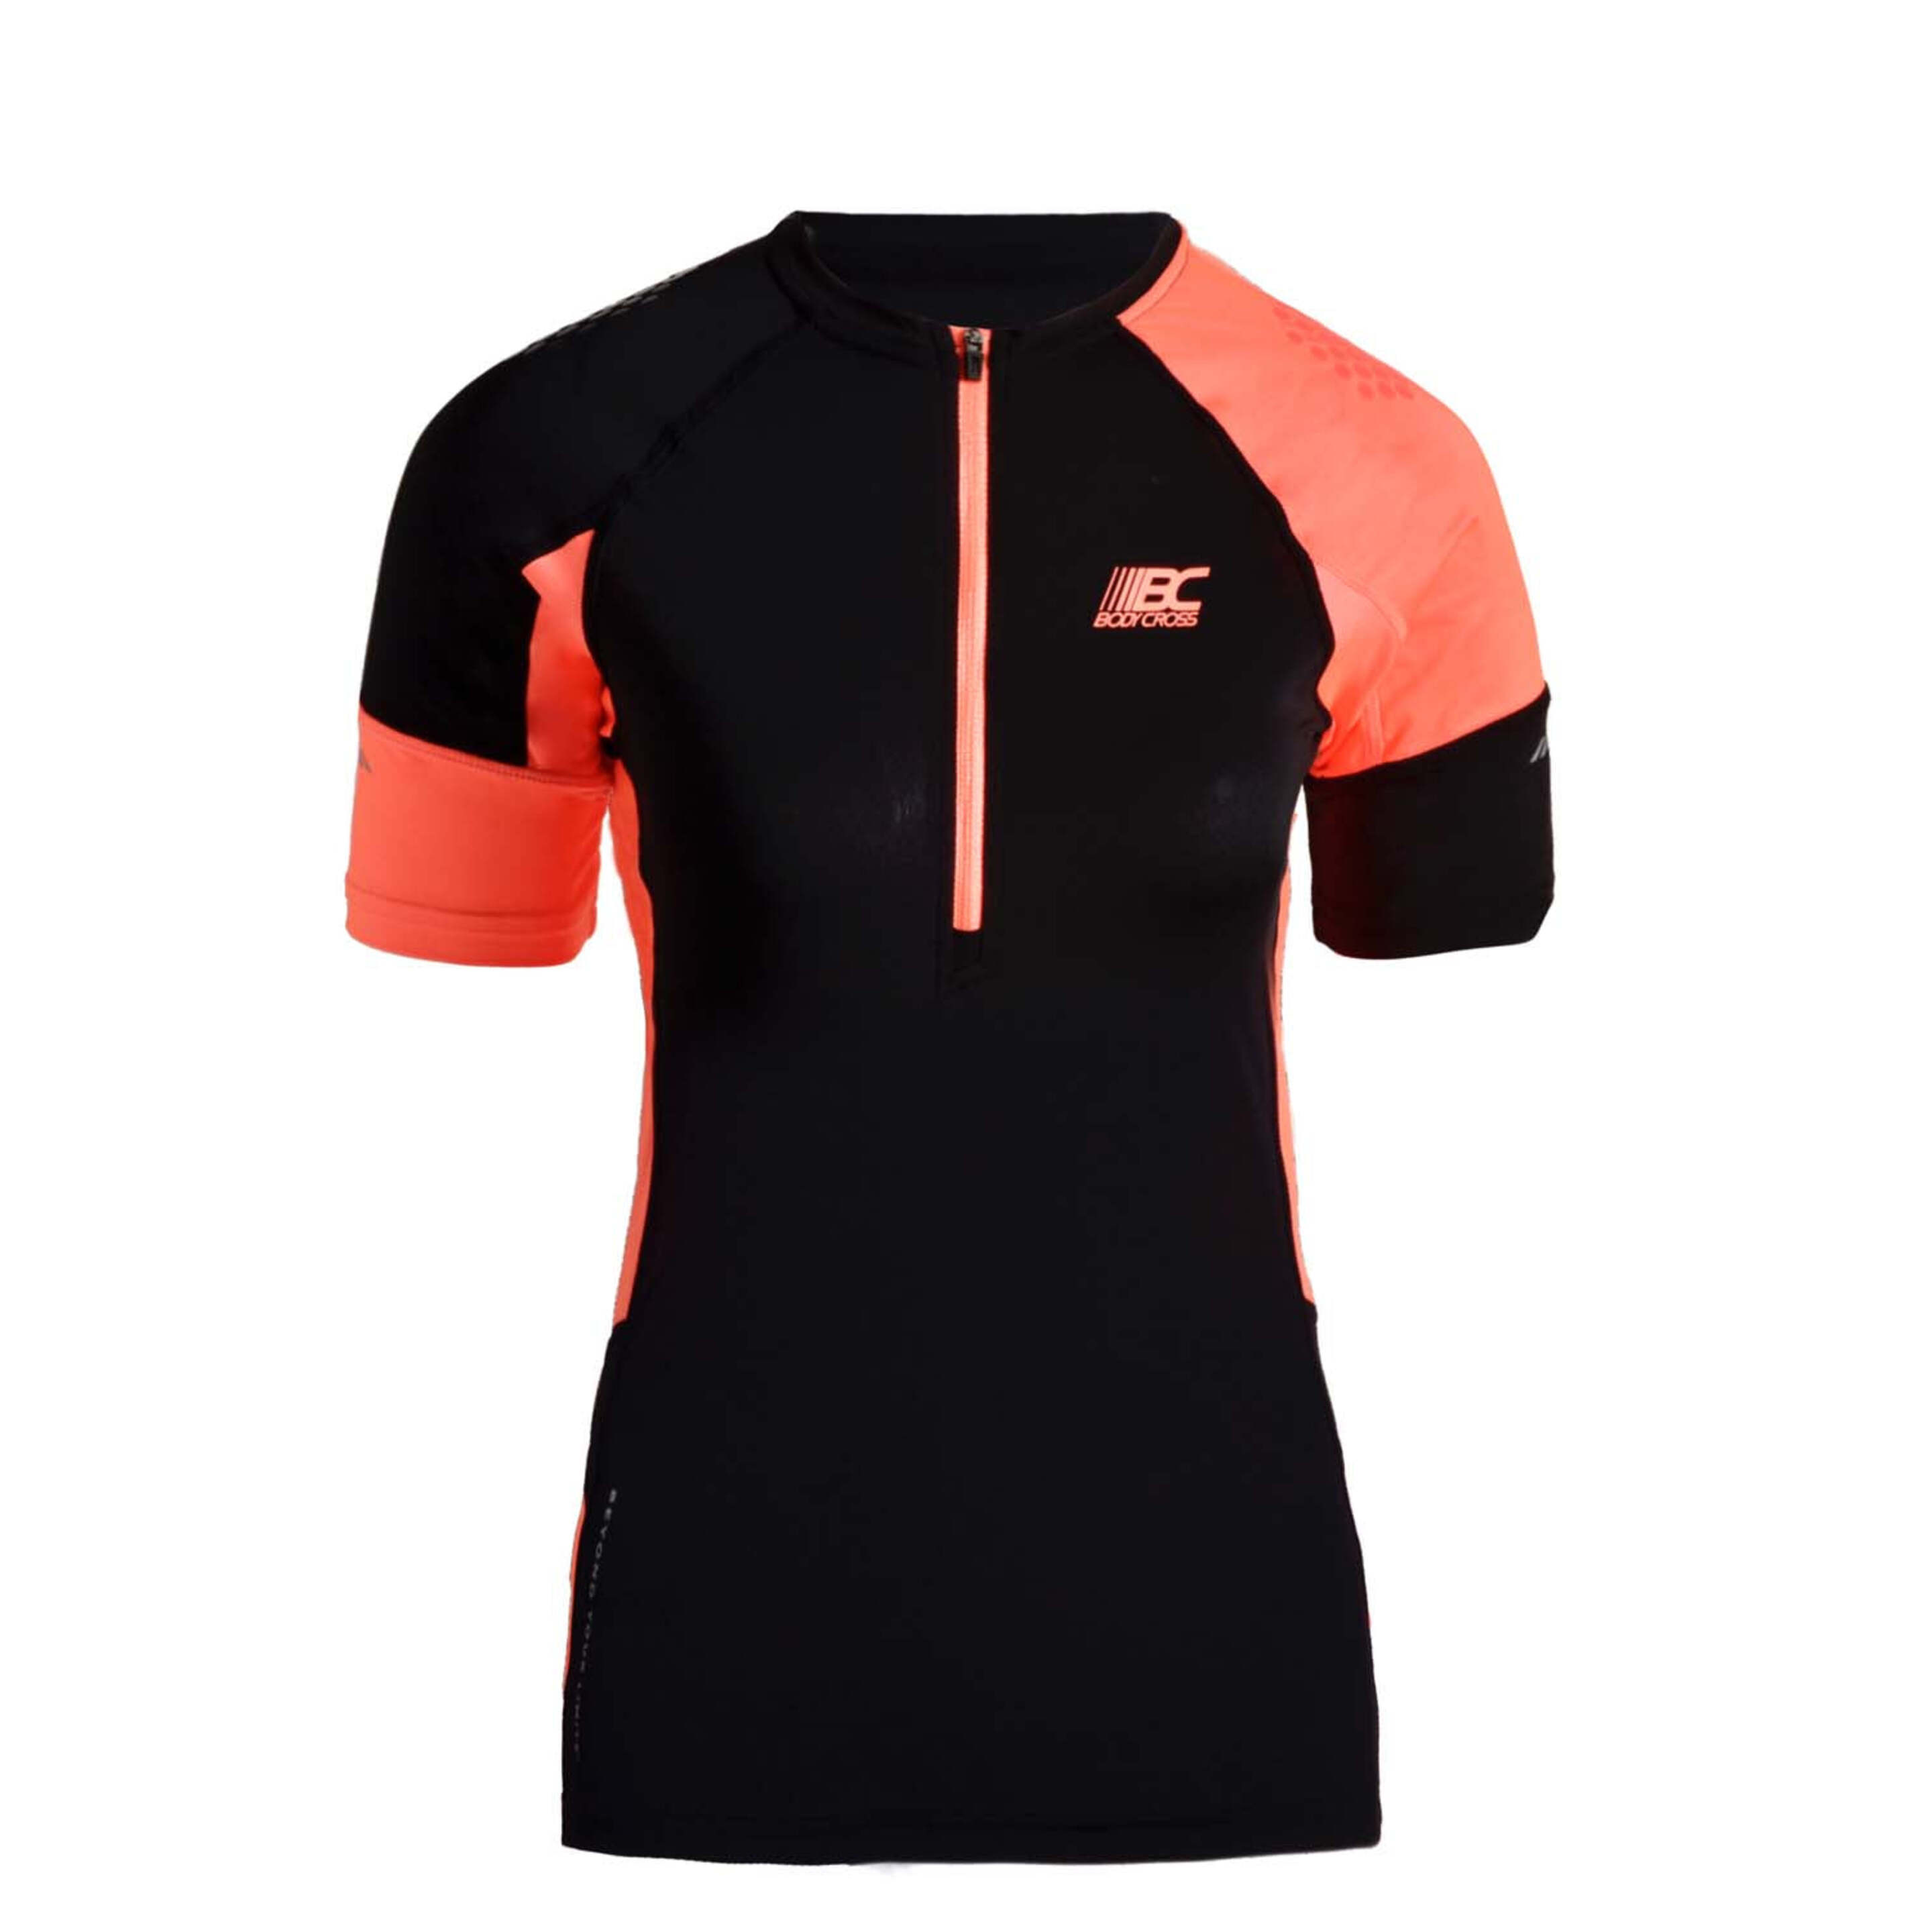 Camiseta Bodycross Milie - Coral/Negro - Milie Ultra-black/neon Corail-l  MKP